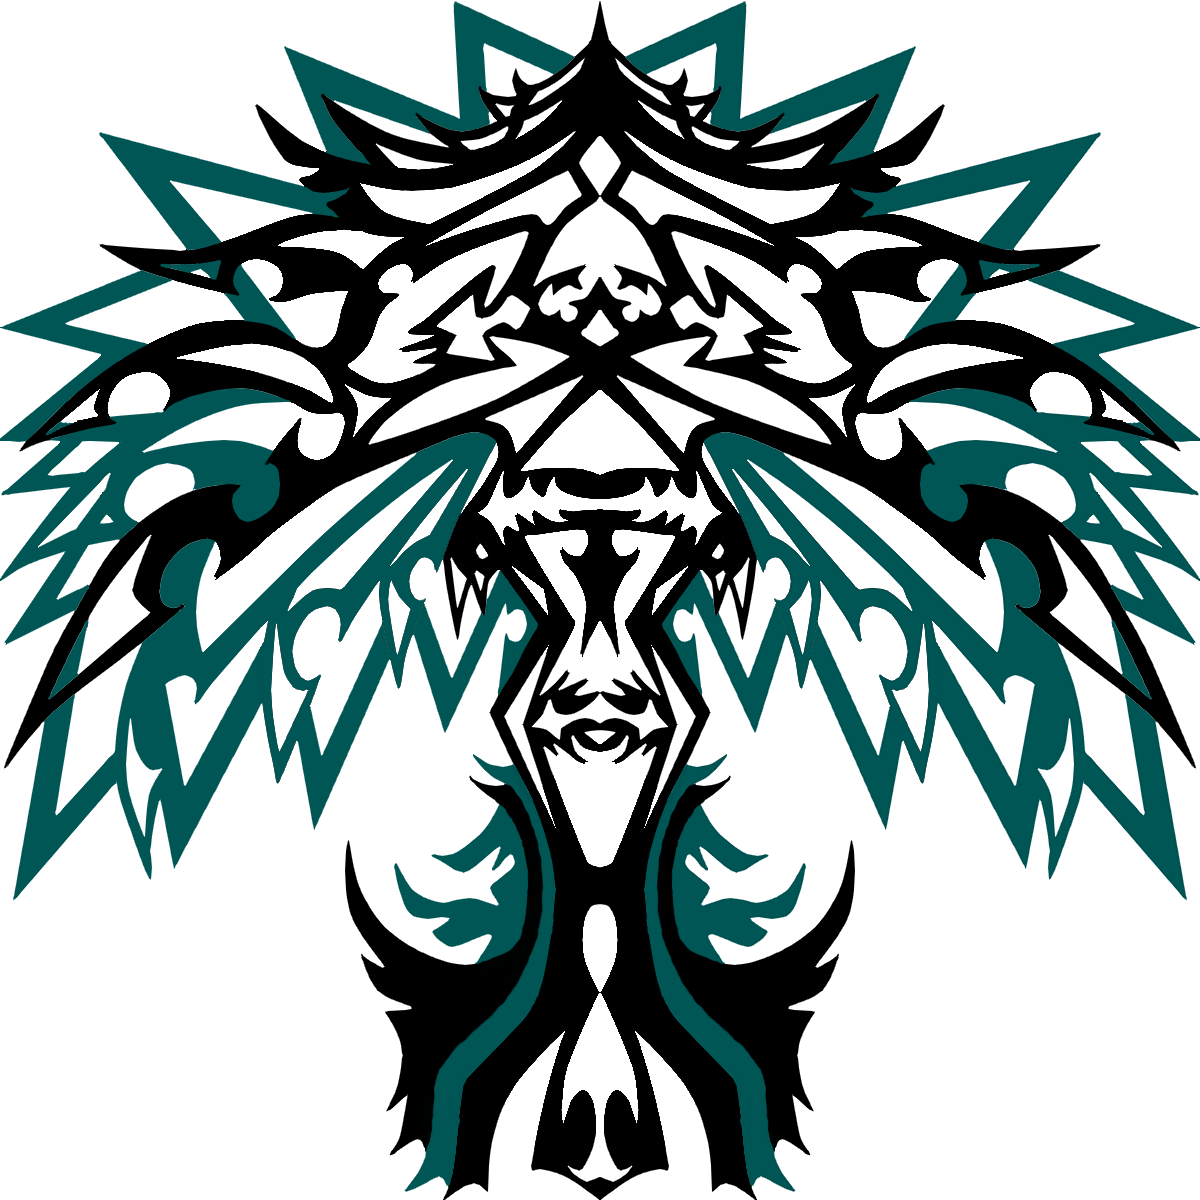 Warframe Clan Emblem : The emblem design for my husband and i's warframe clan: - Micahandandrew